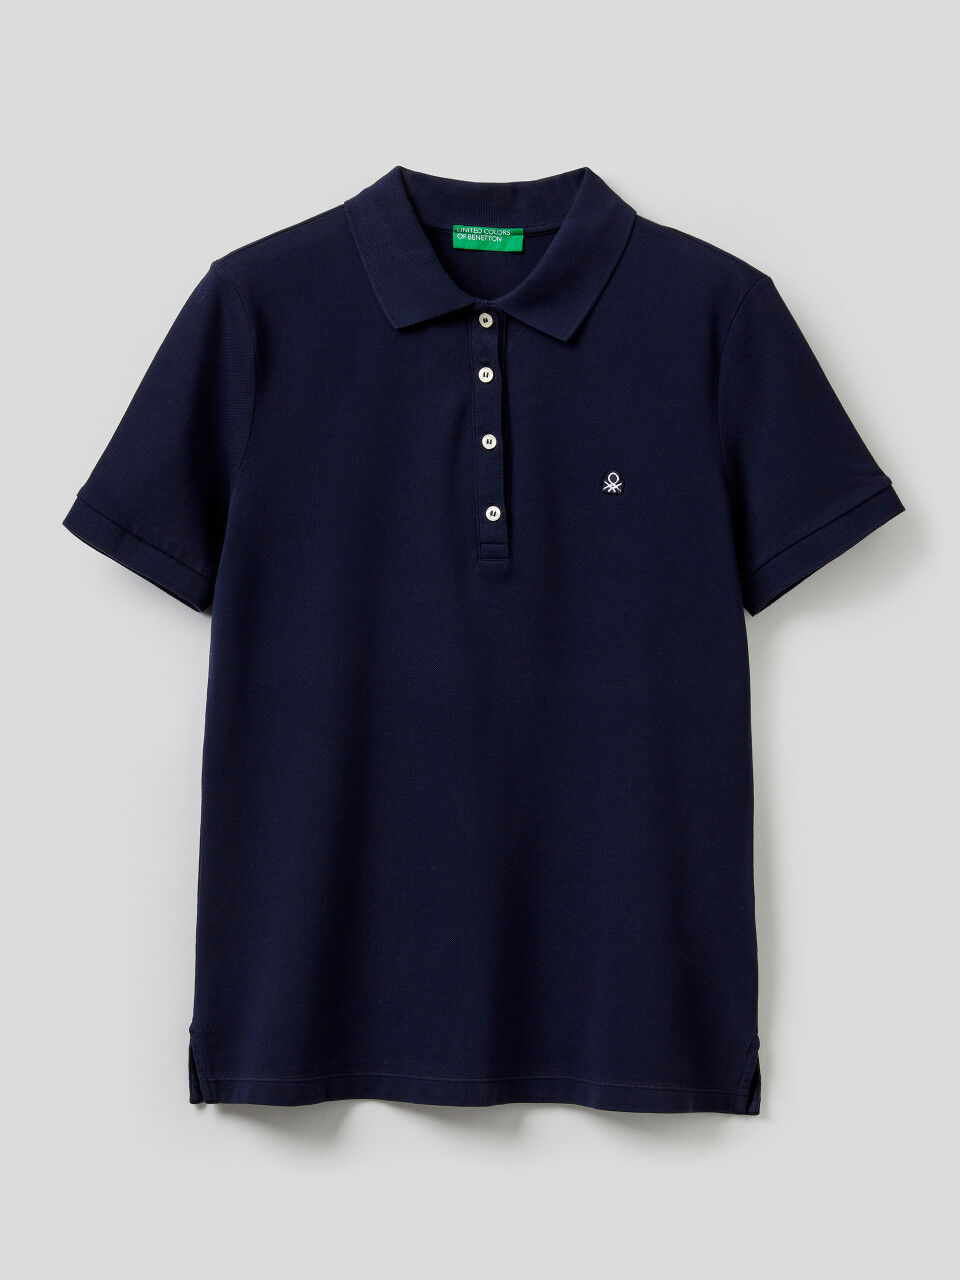 United colors of benetton Polo MODA DONNA Camicie & T-shirt Polo Sportivo Verde 160Cm sconto 62% 